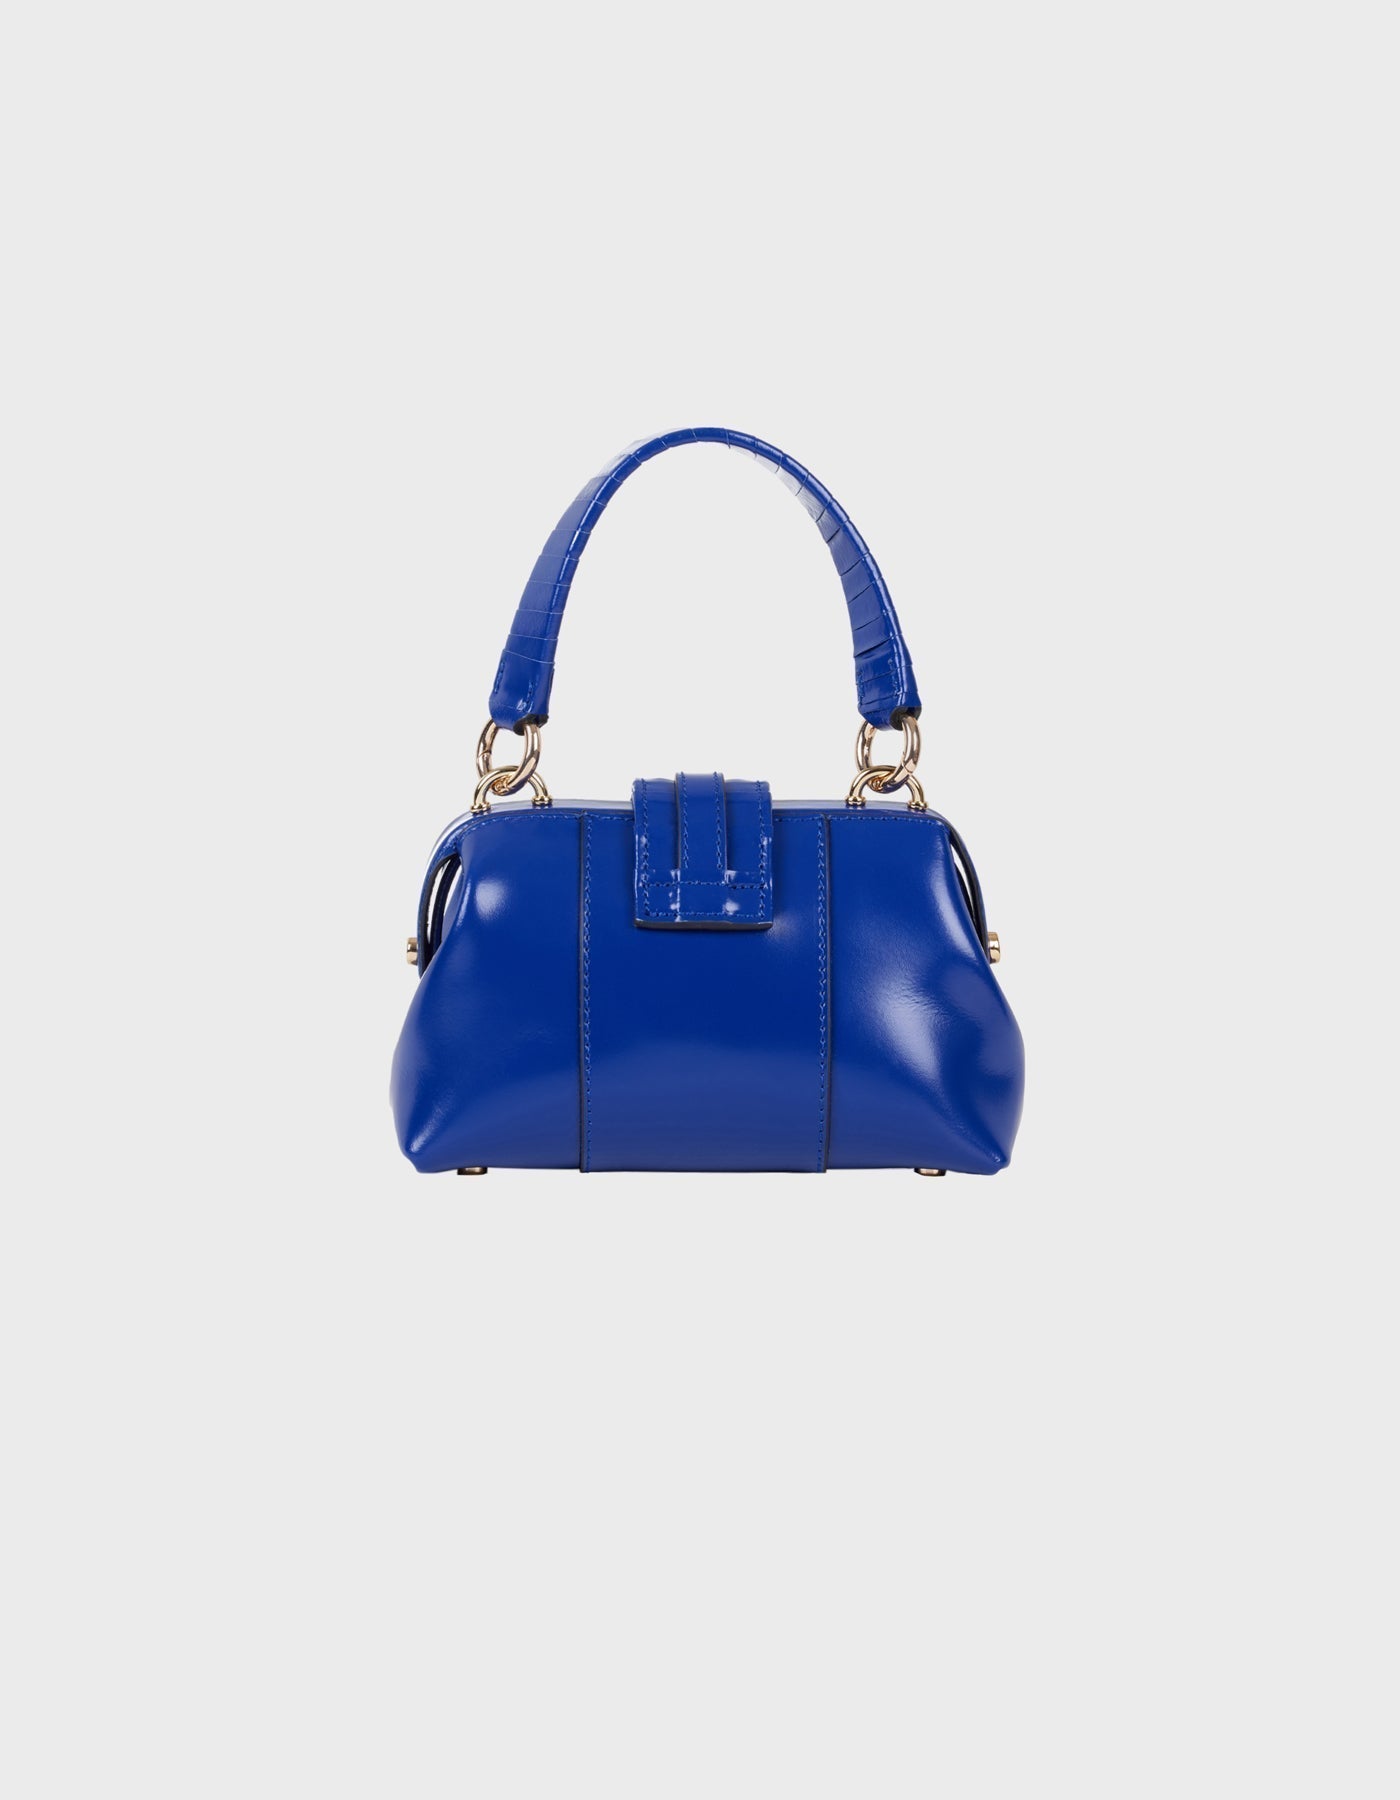 HiVa Atelier | Mini Nubes Doctor Bag Sodalite Blue | Beautiful and Versatile